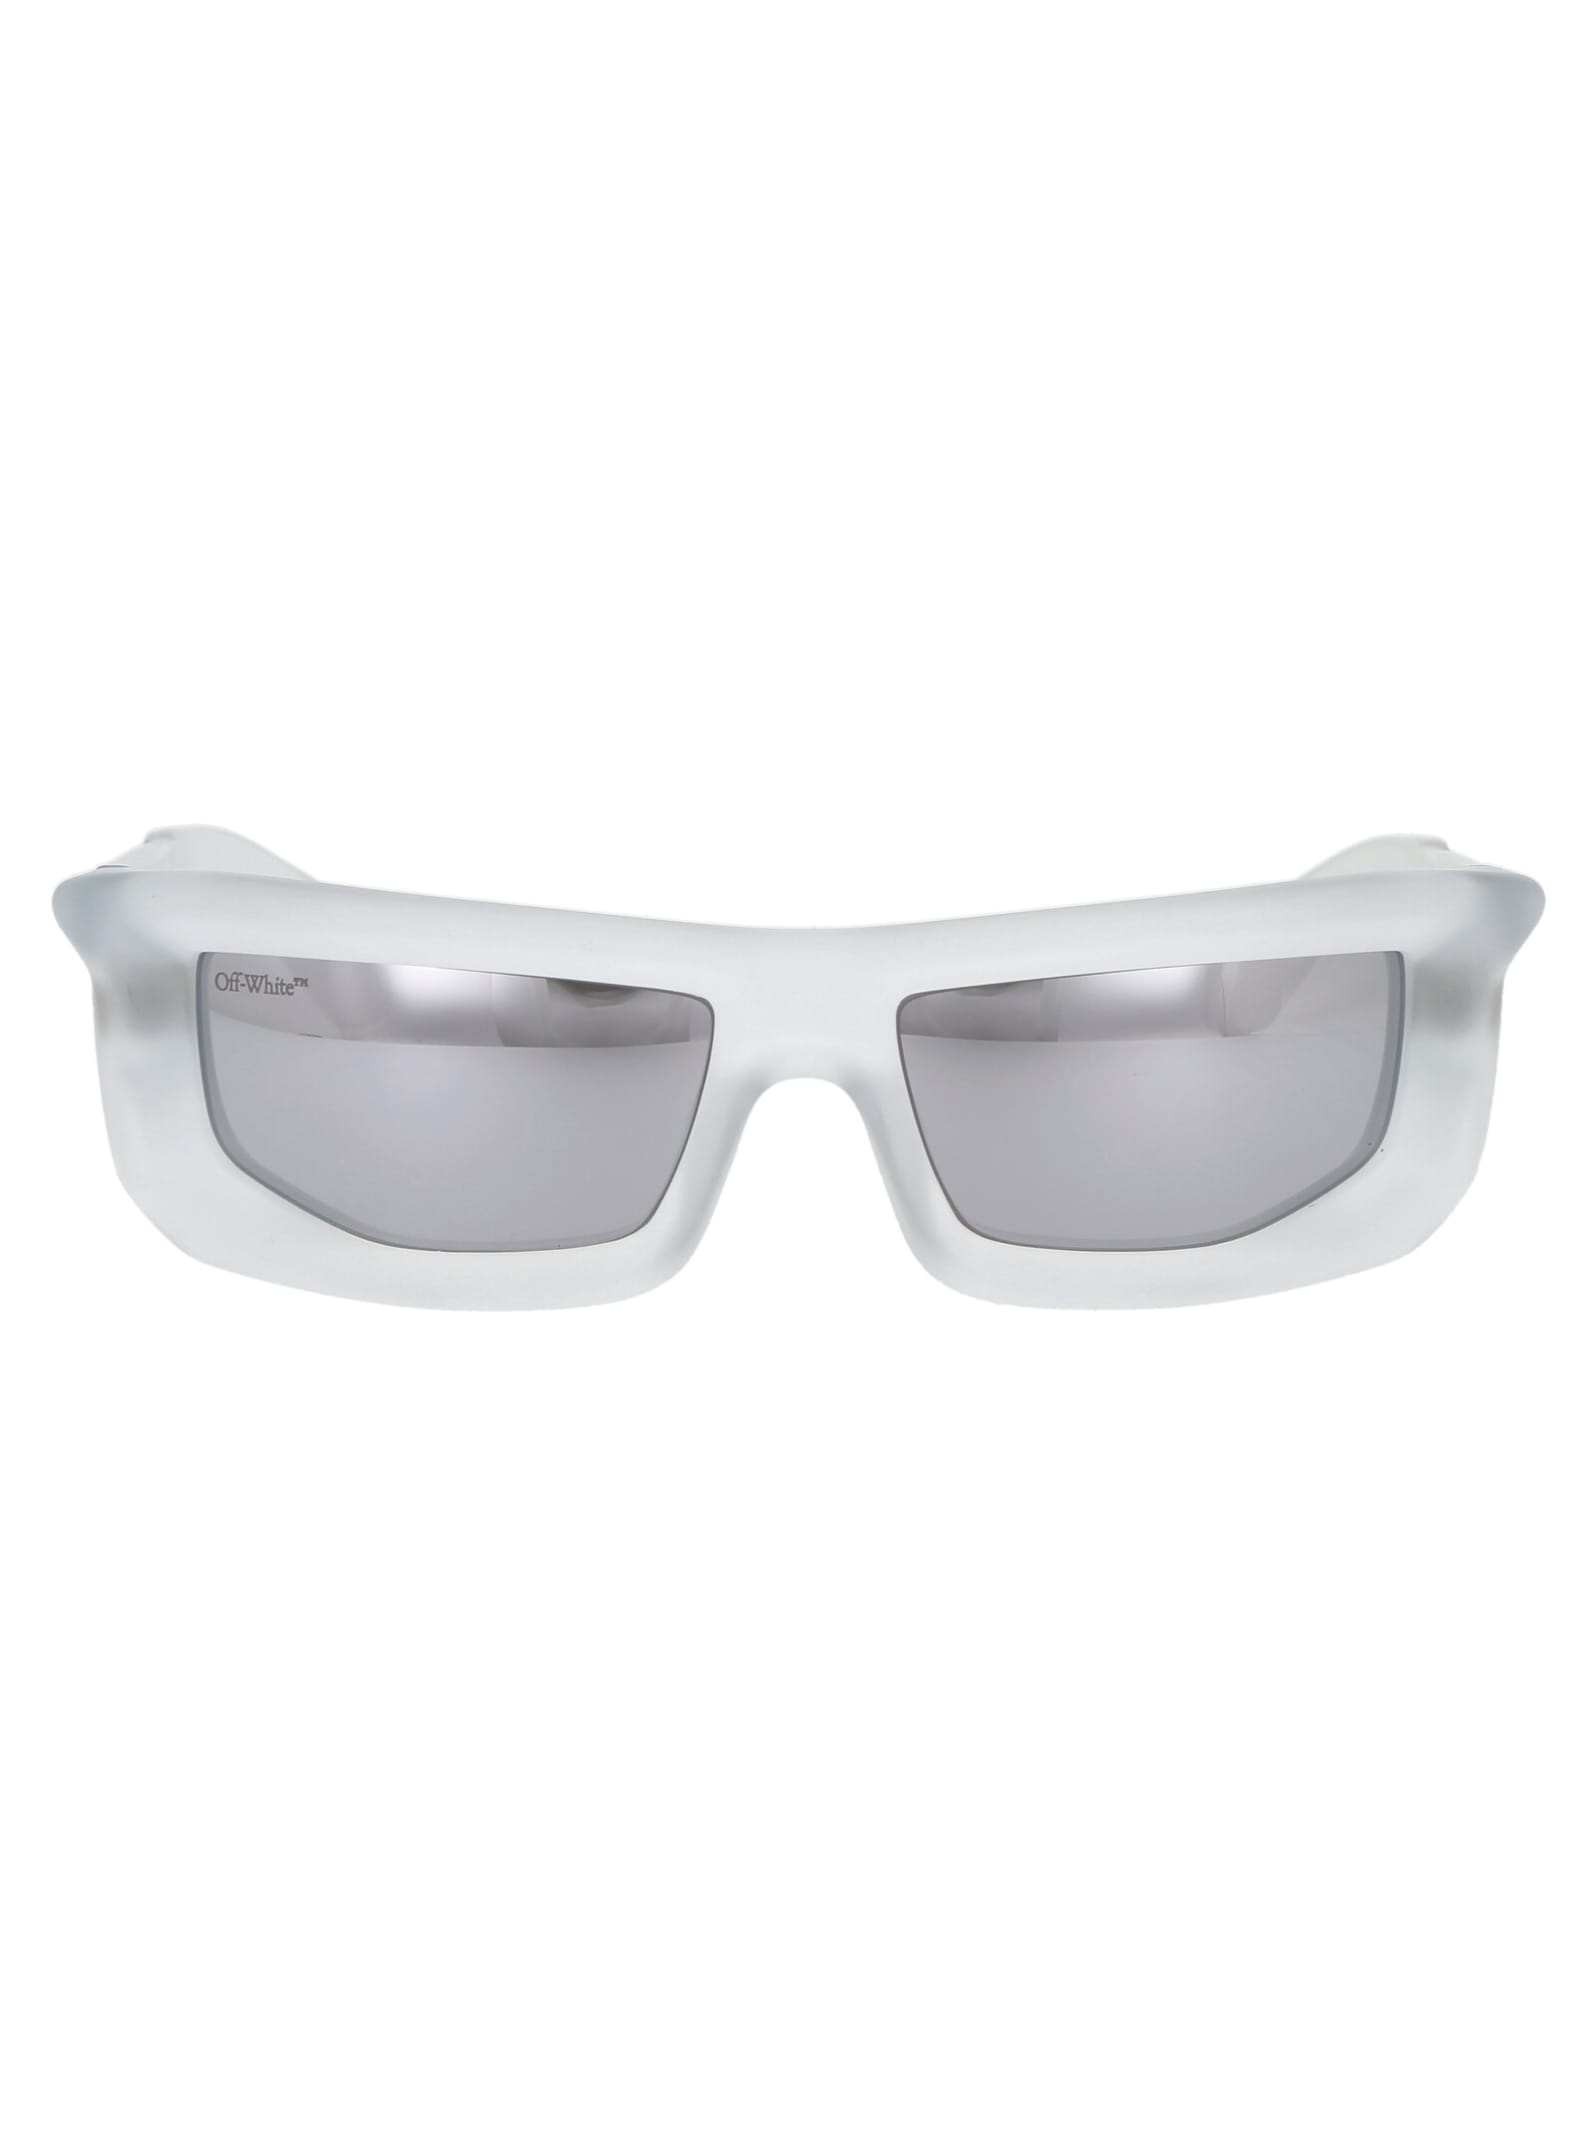 Off-White Volcanite Sunglasses